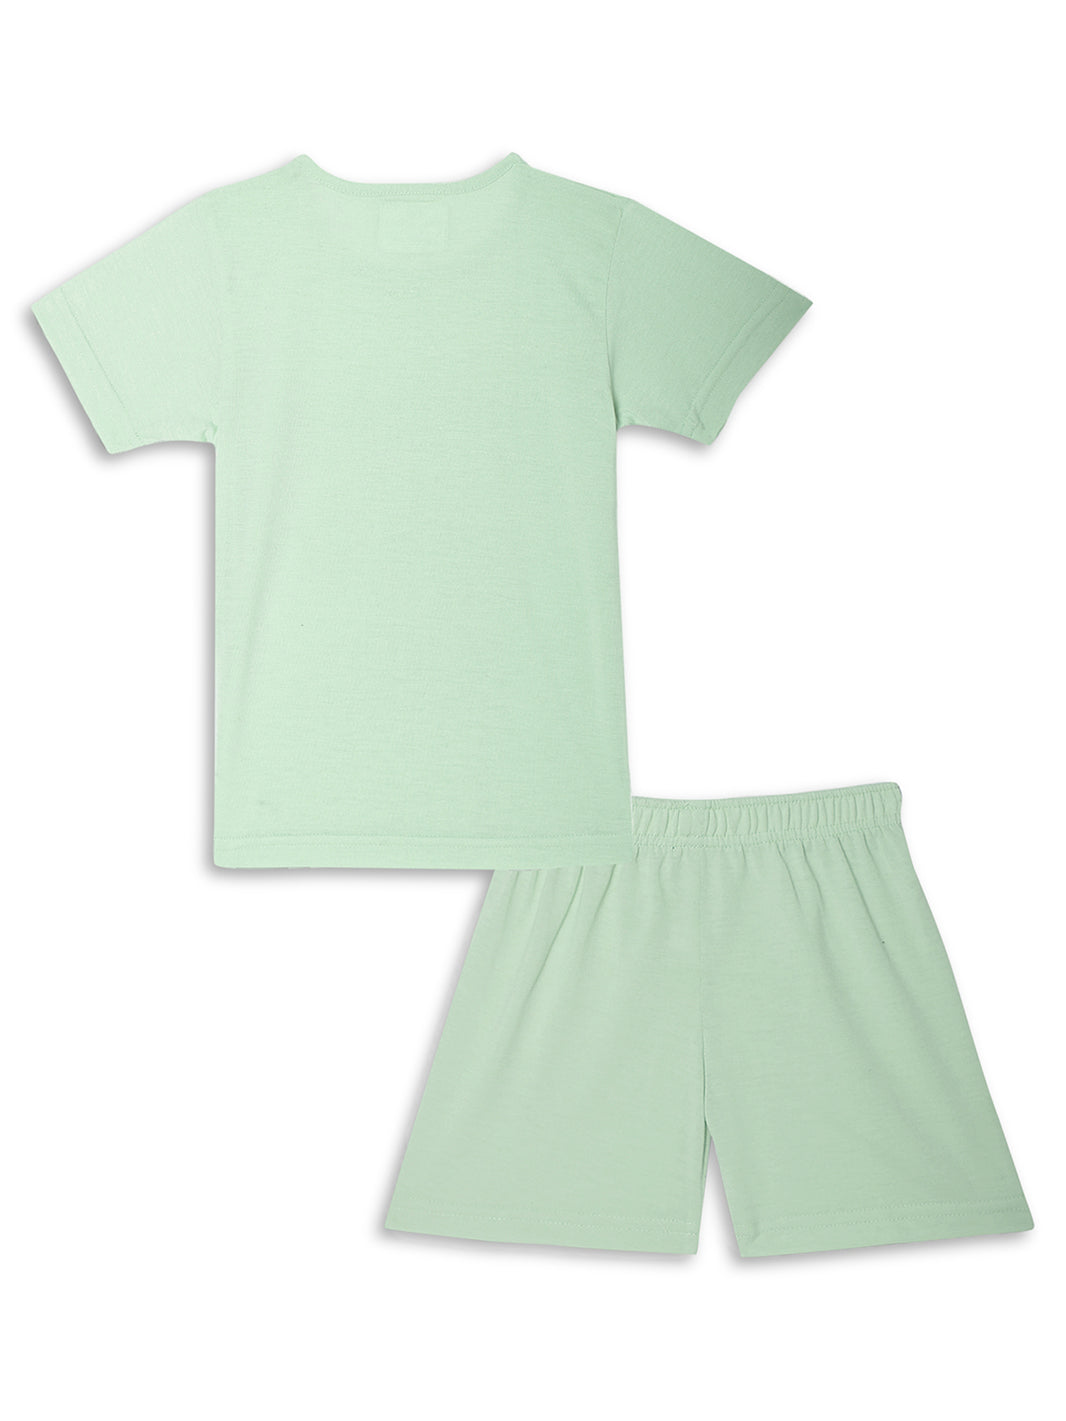 Vimal Jonney Printed Green Regular Fit Cotton blended Tshirt And Bottom Set For Kids